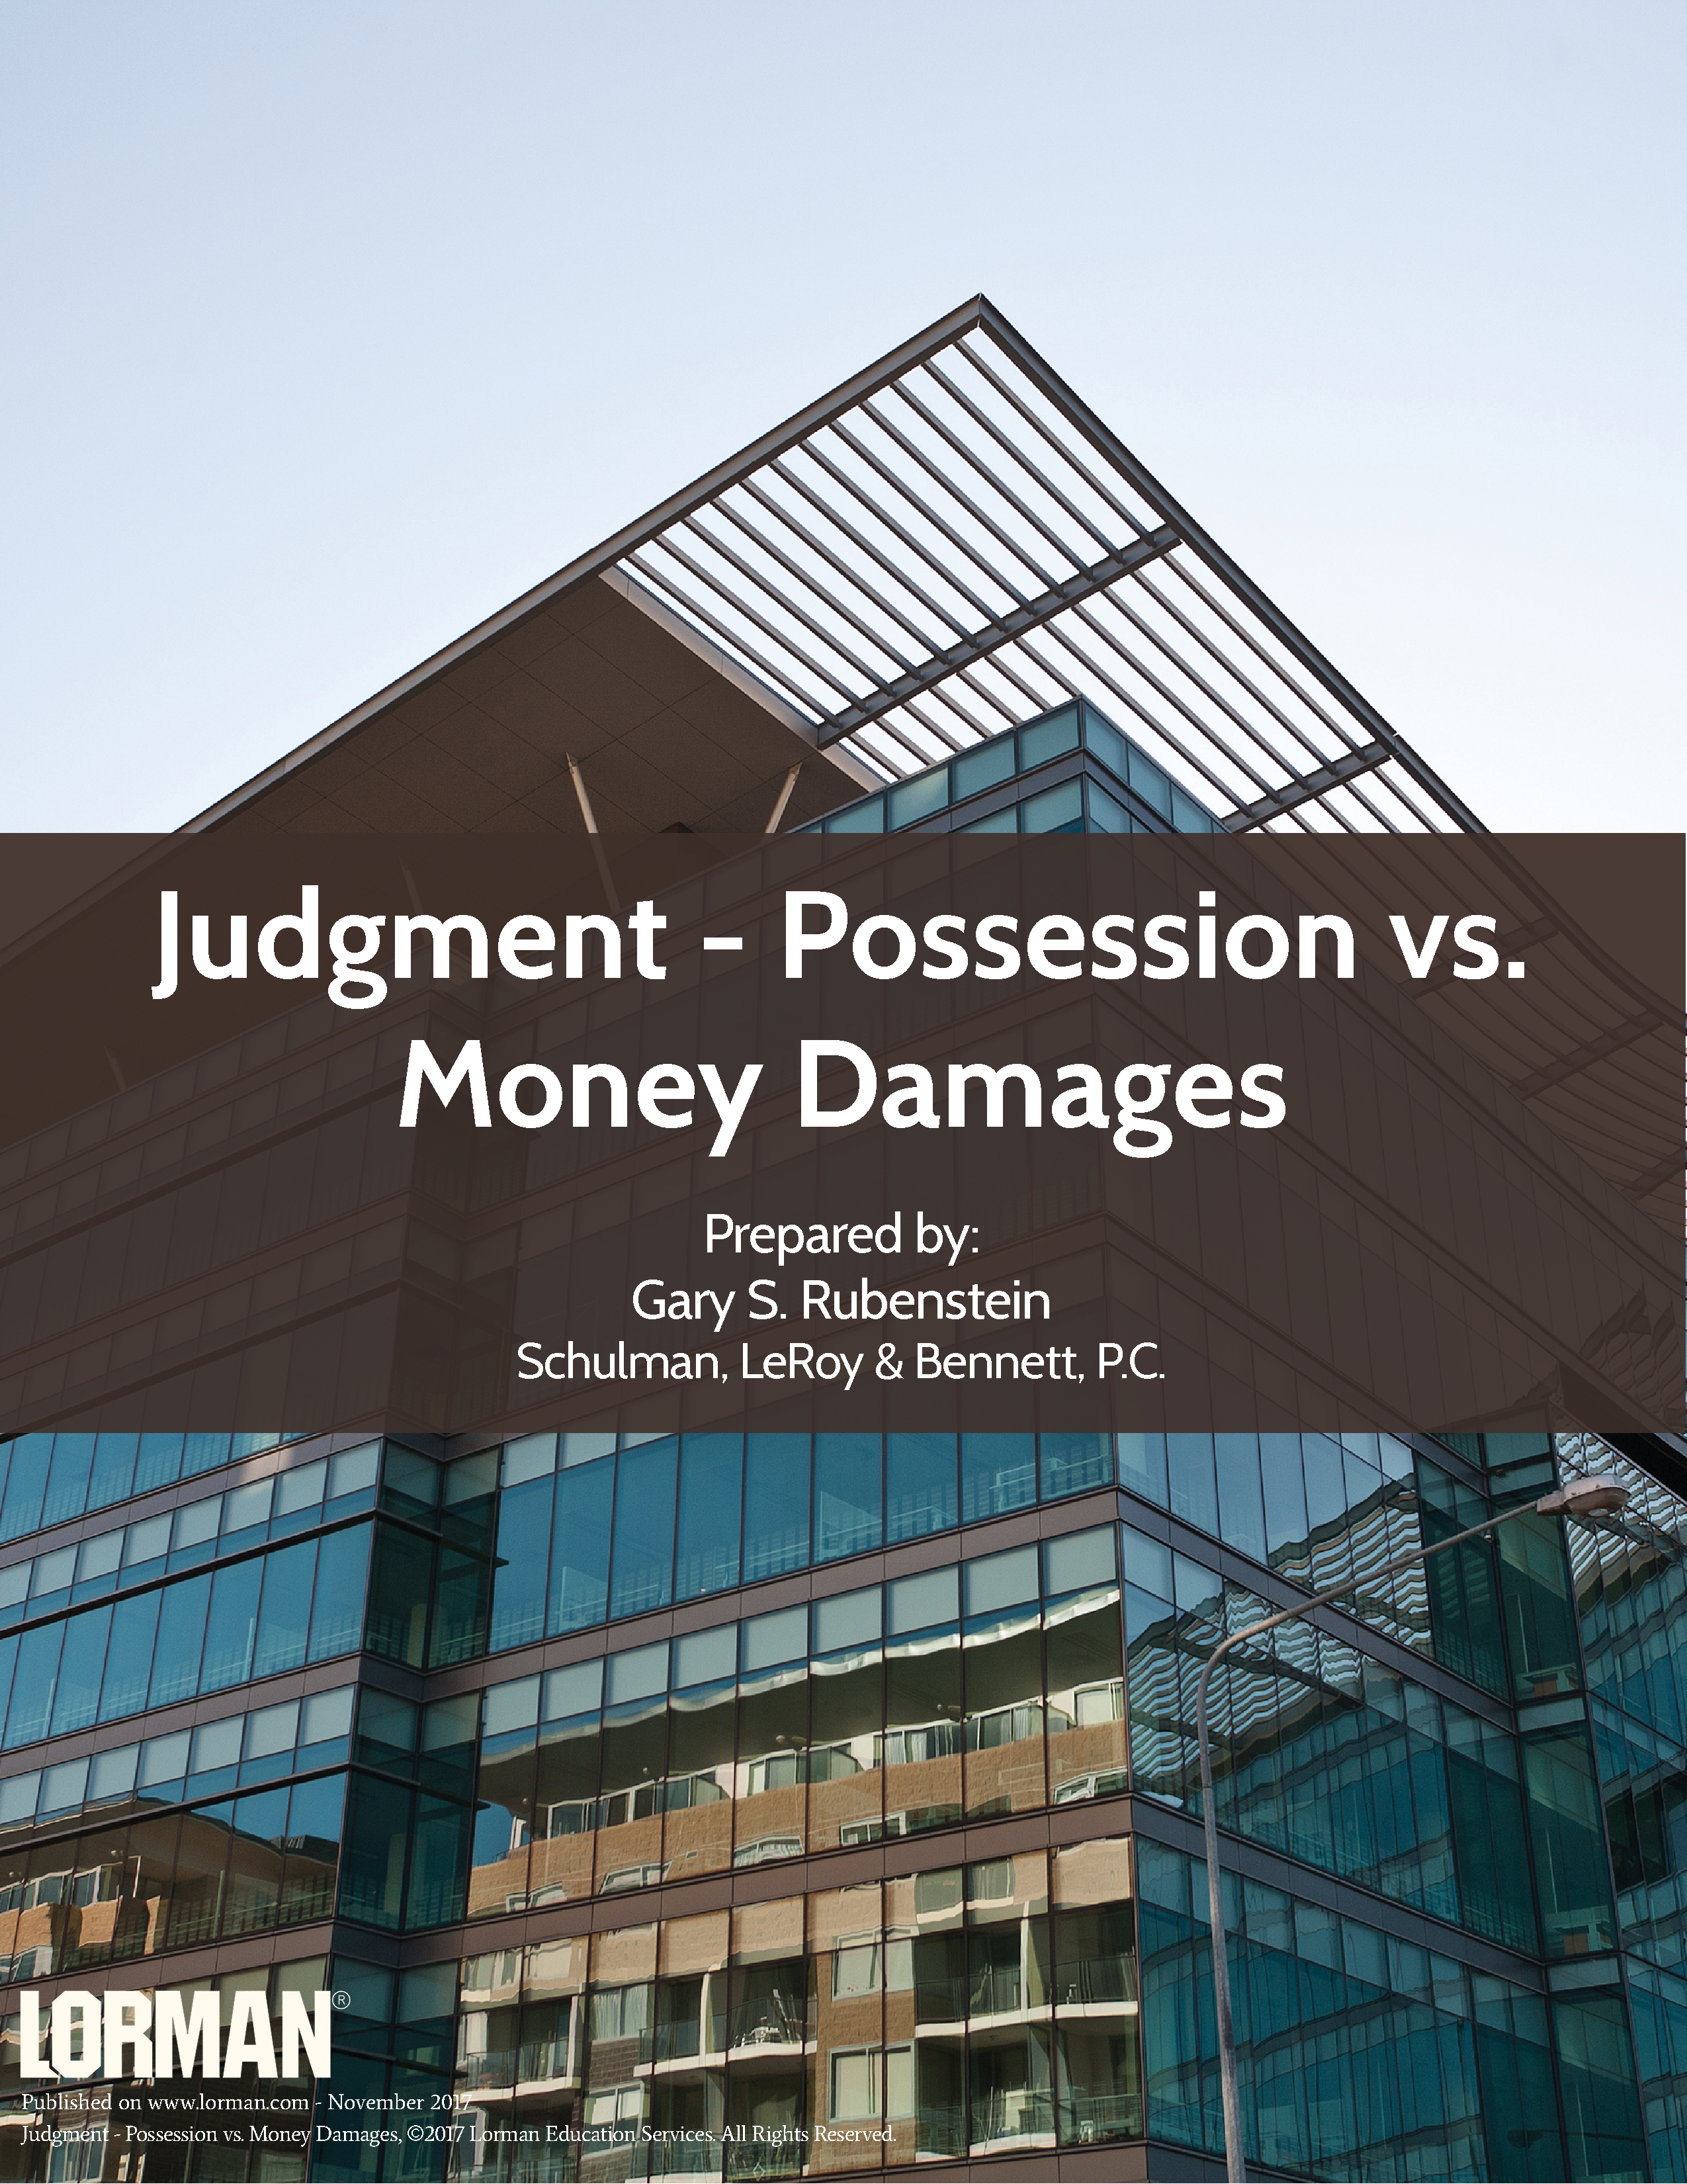 Judgment - Possession vs. Money Damages